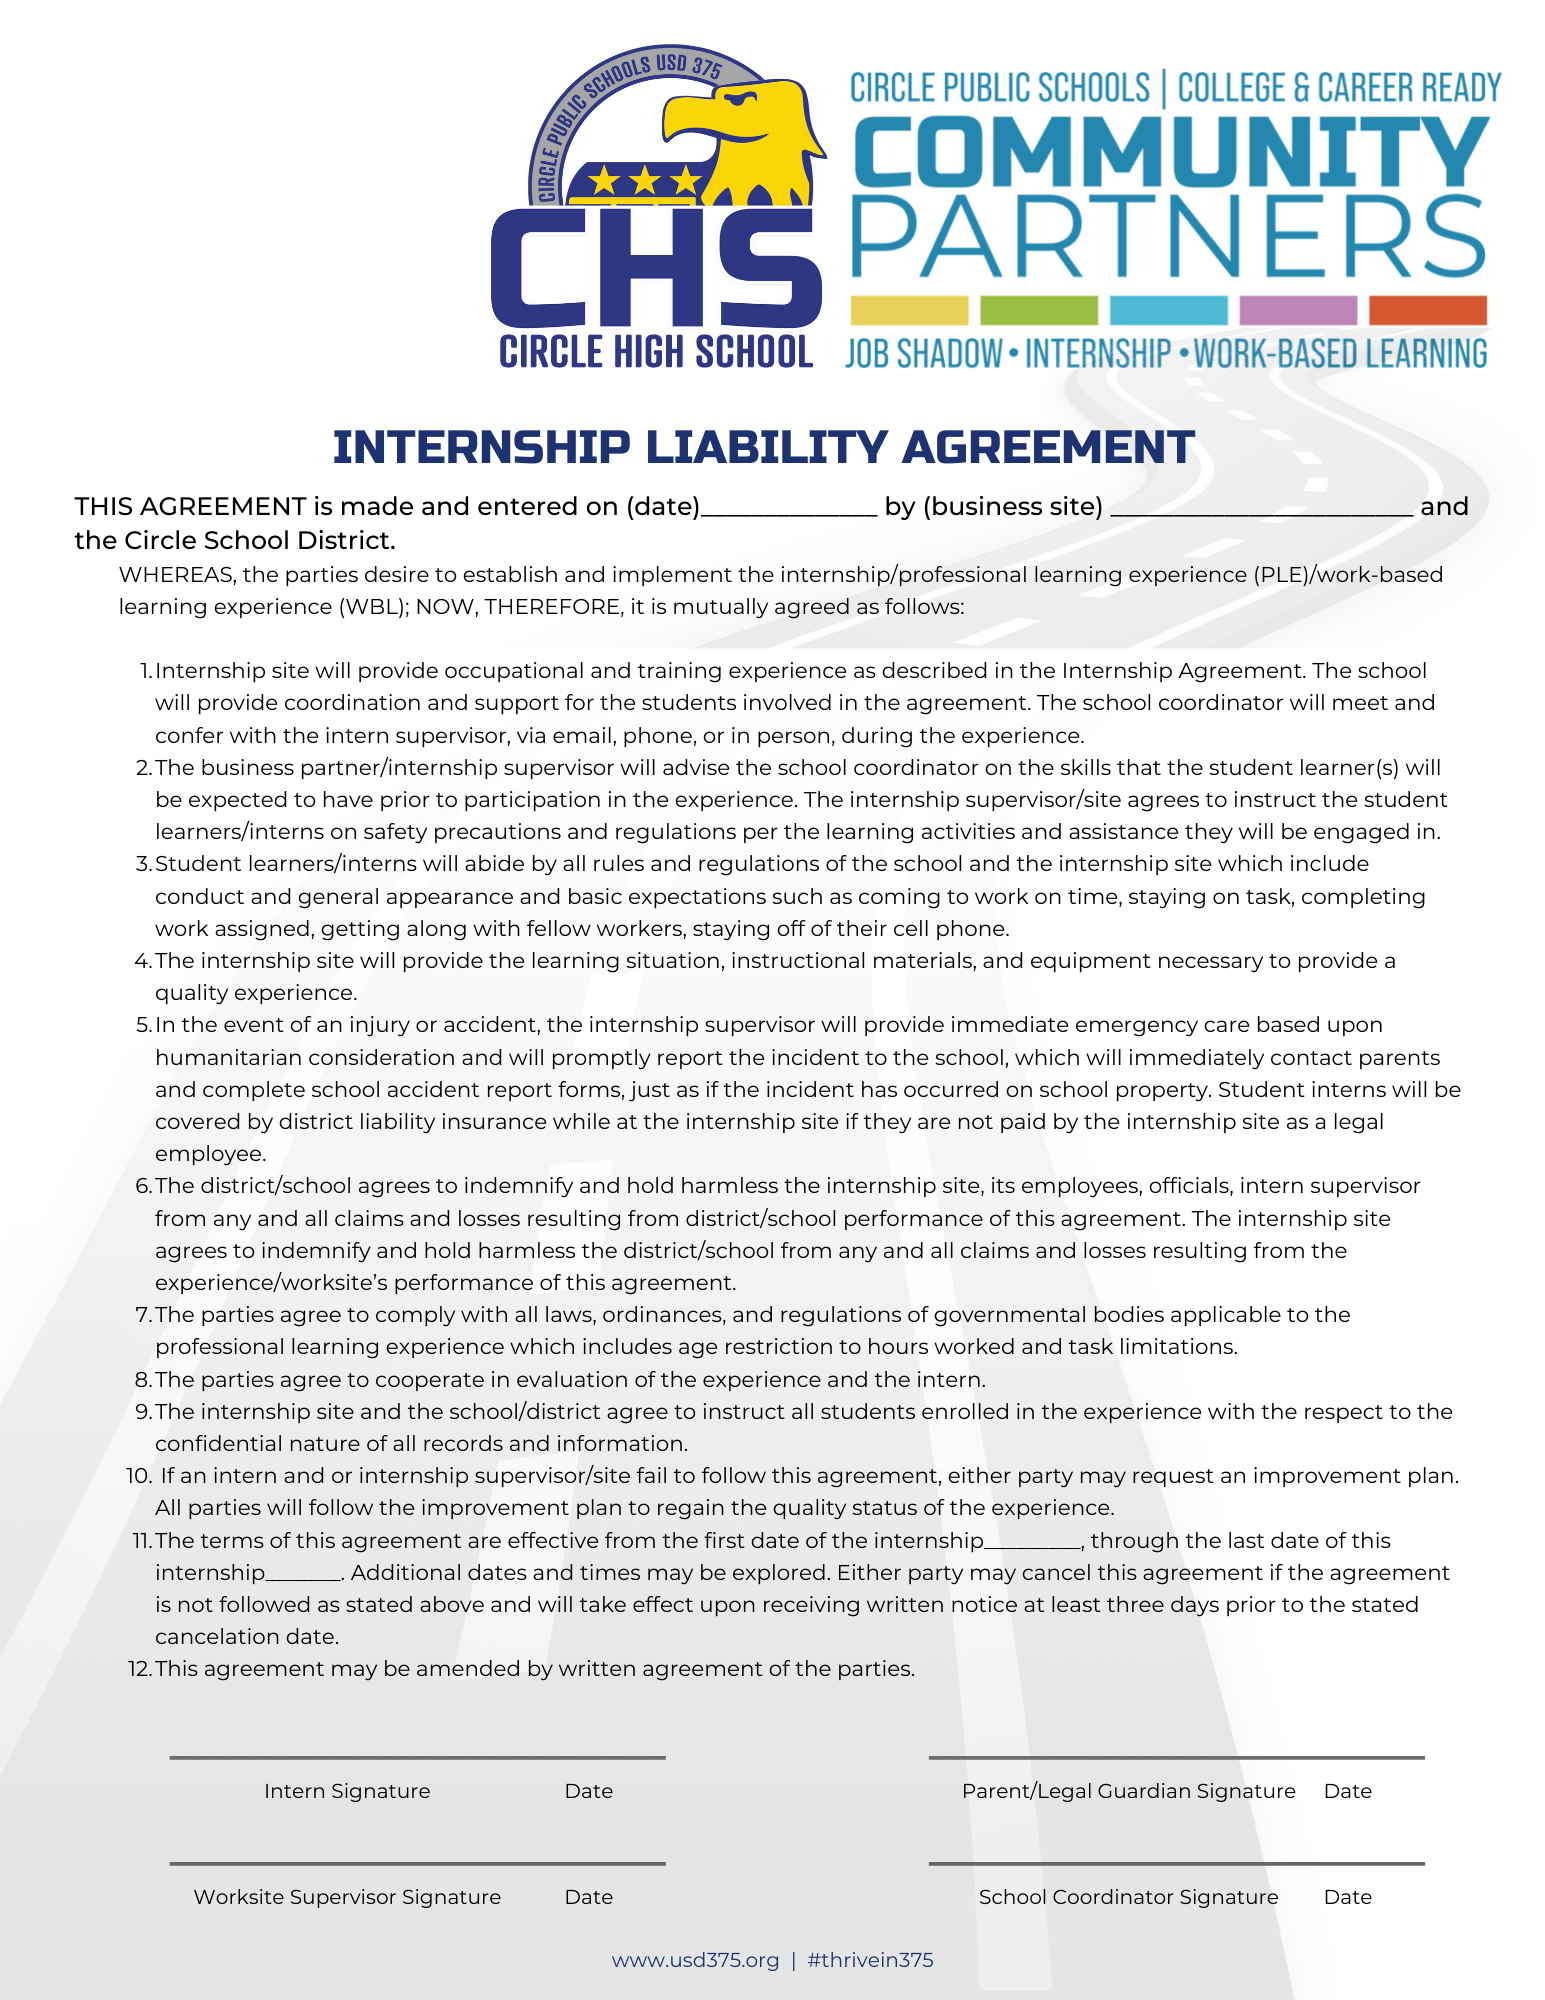 Internship Liability Agreement